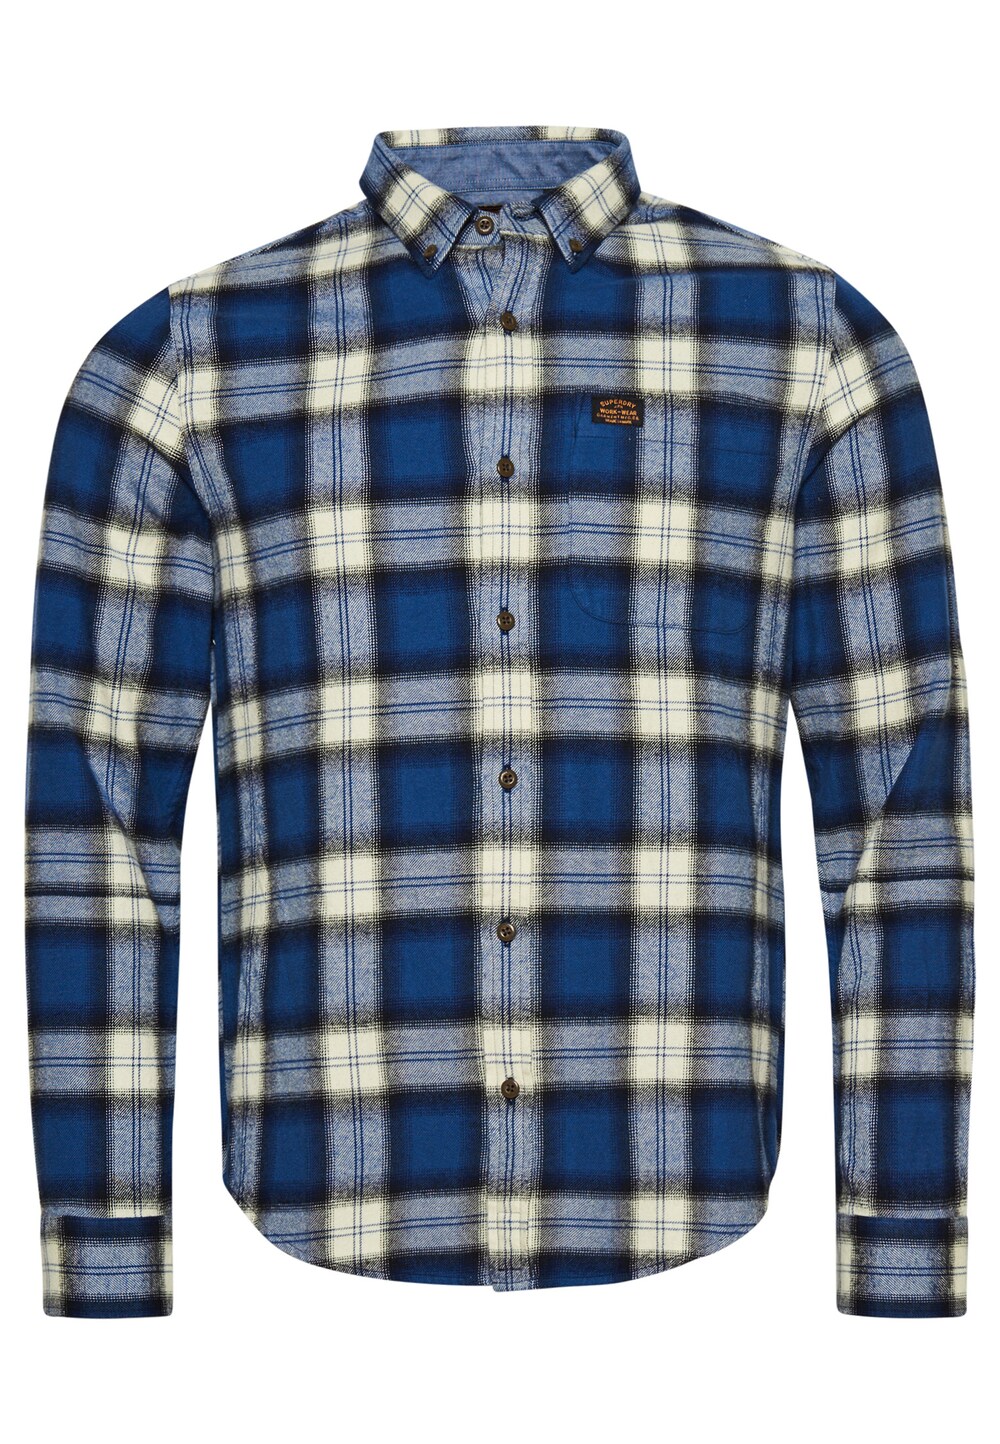 Рубашка на пуговицах стандартного кроя Superdry Vintage Lumberjack, синий/голубой